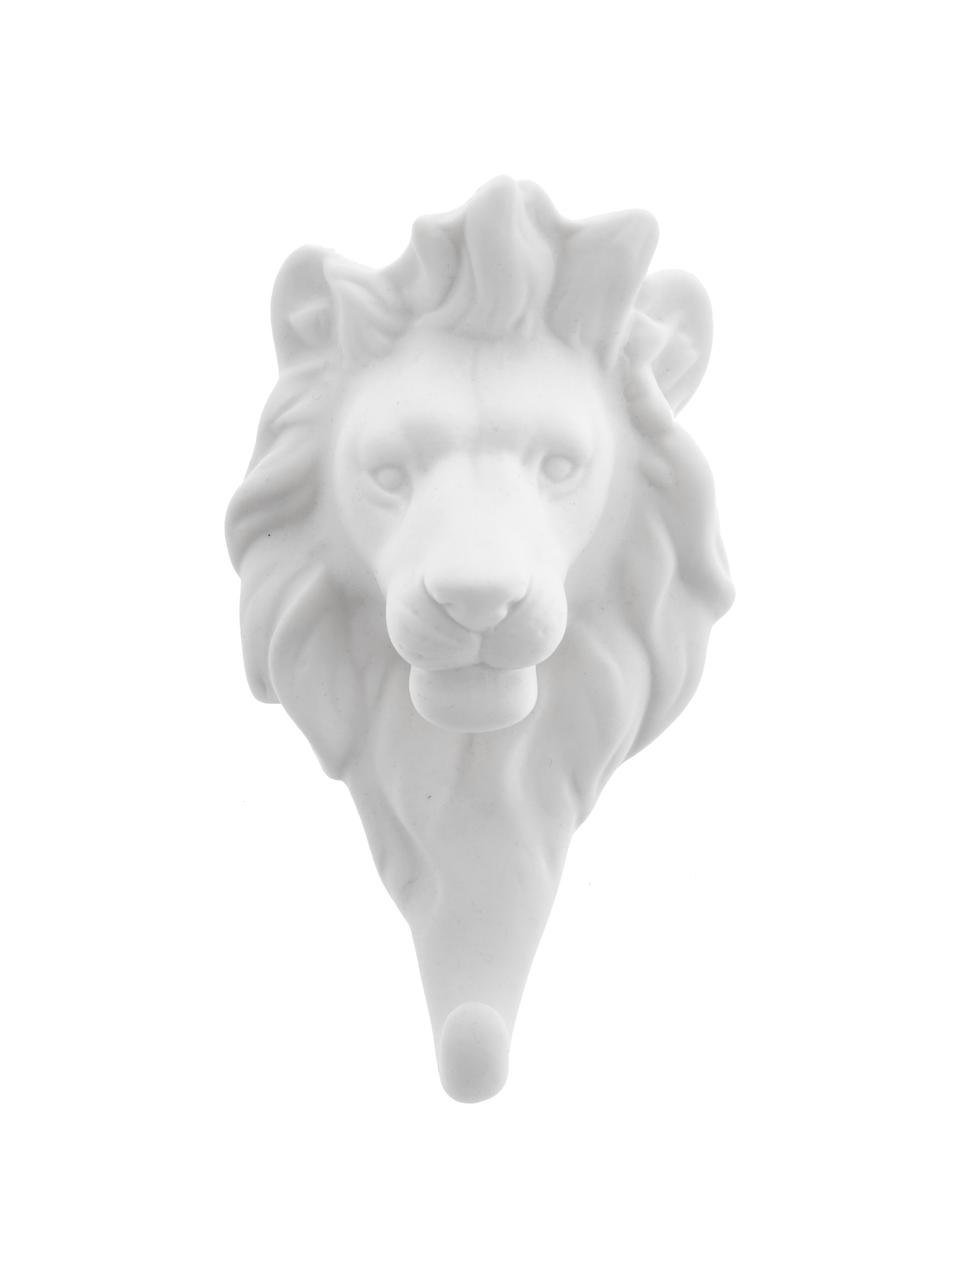 Wandhaken Lion aus Porzellan, Porzellan, Weiss, H 15 cm